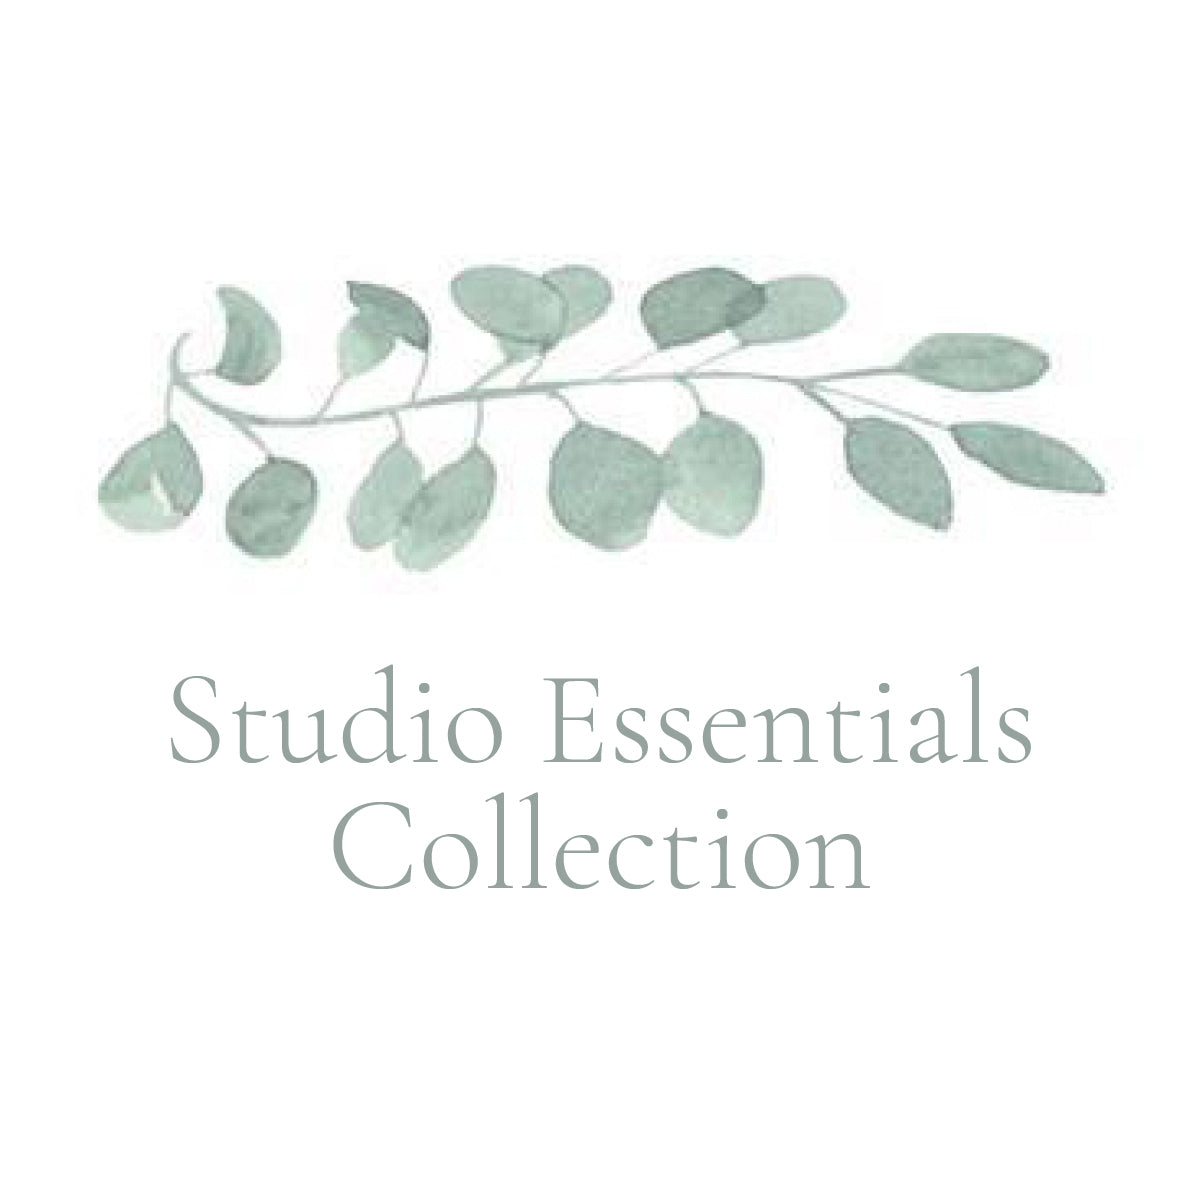 Studio Essentials Collection